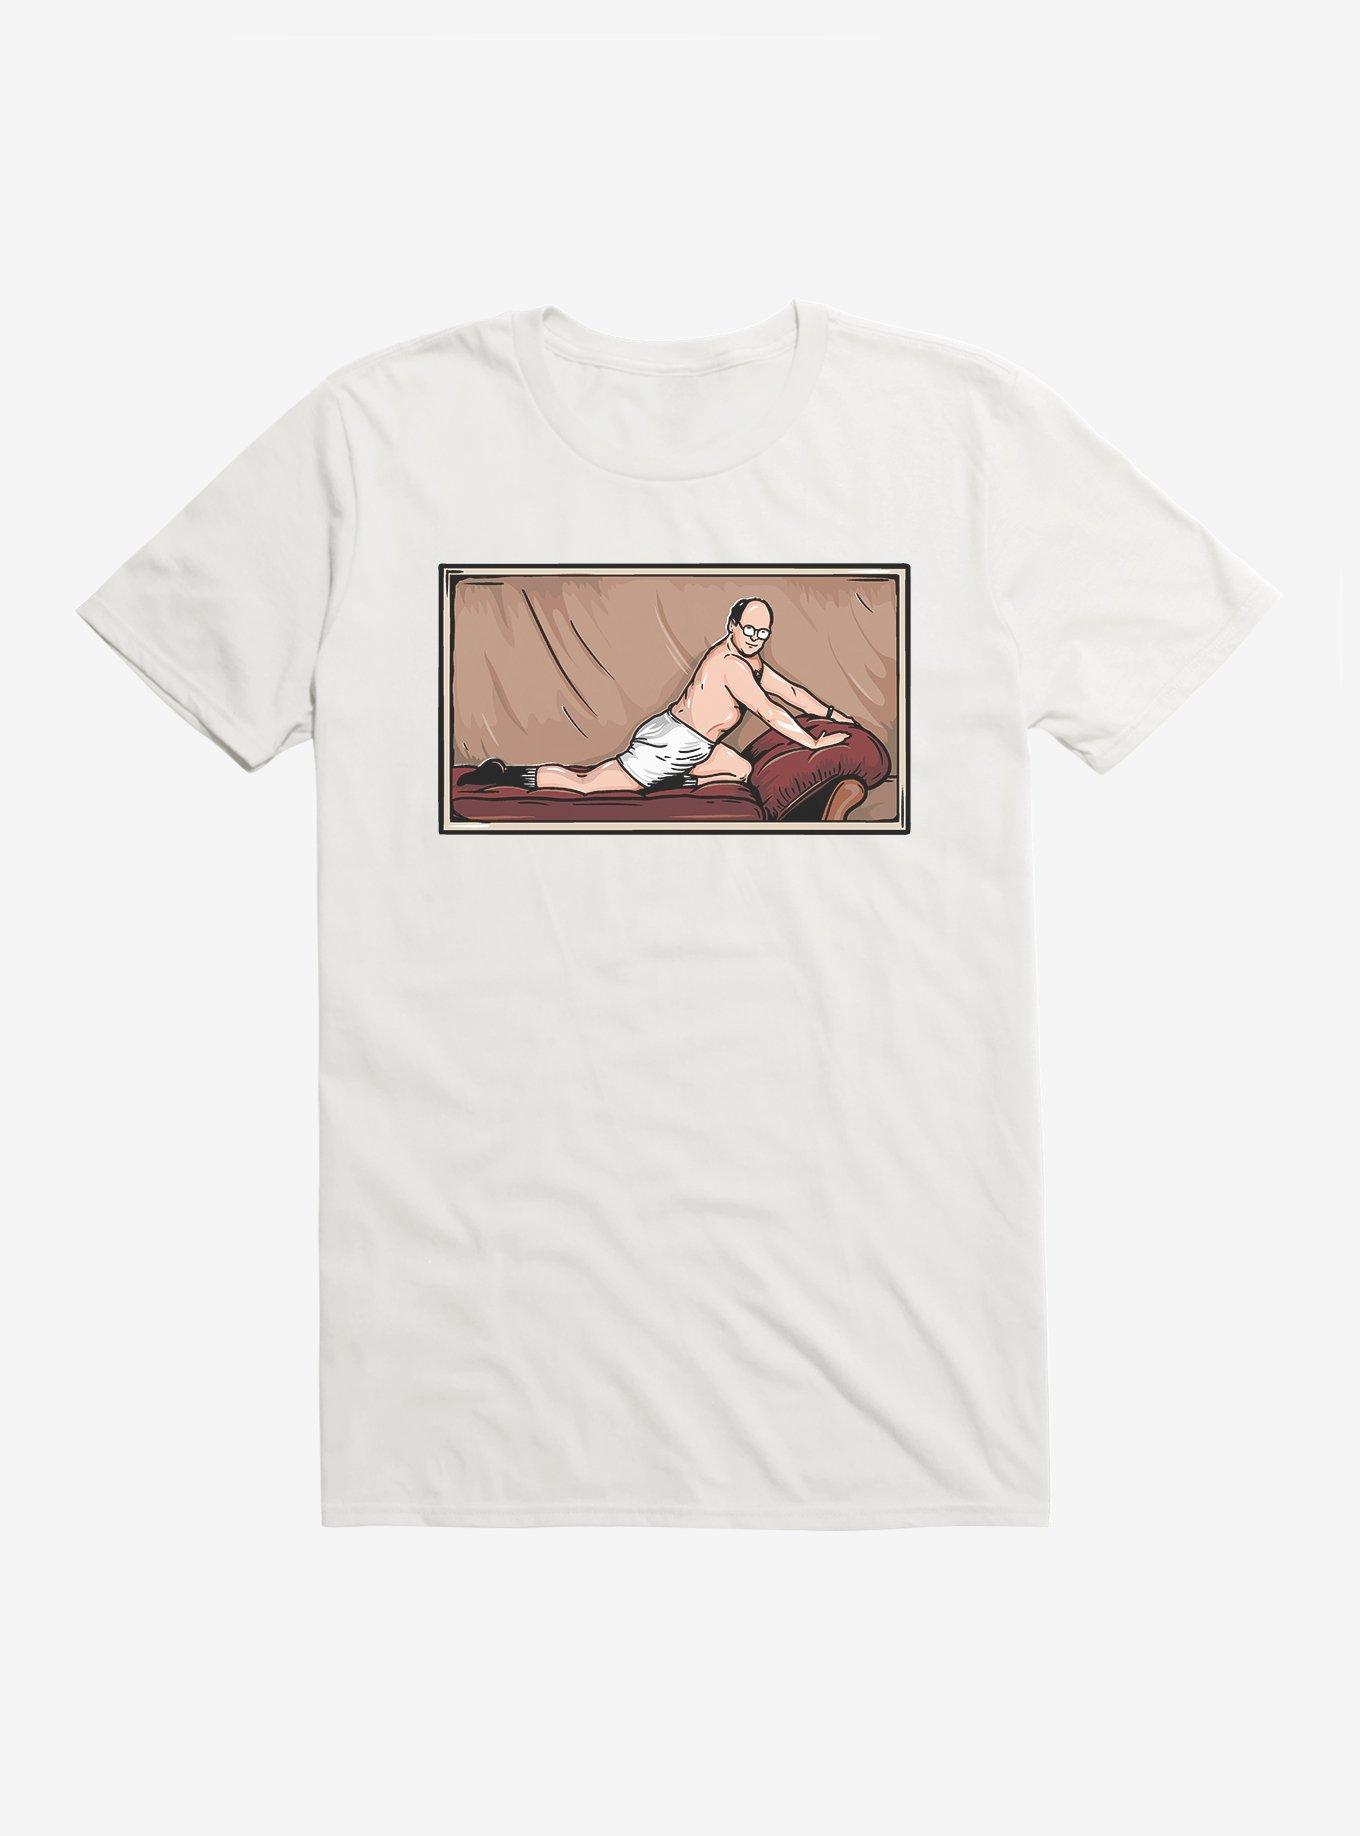 Seinfeld Timeless Art Of Seduction T-Shirt | Hot Topic